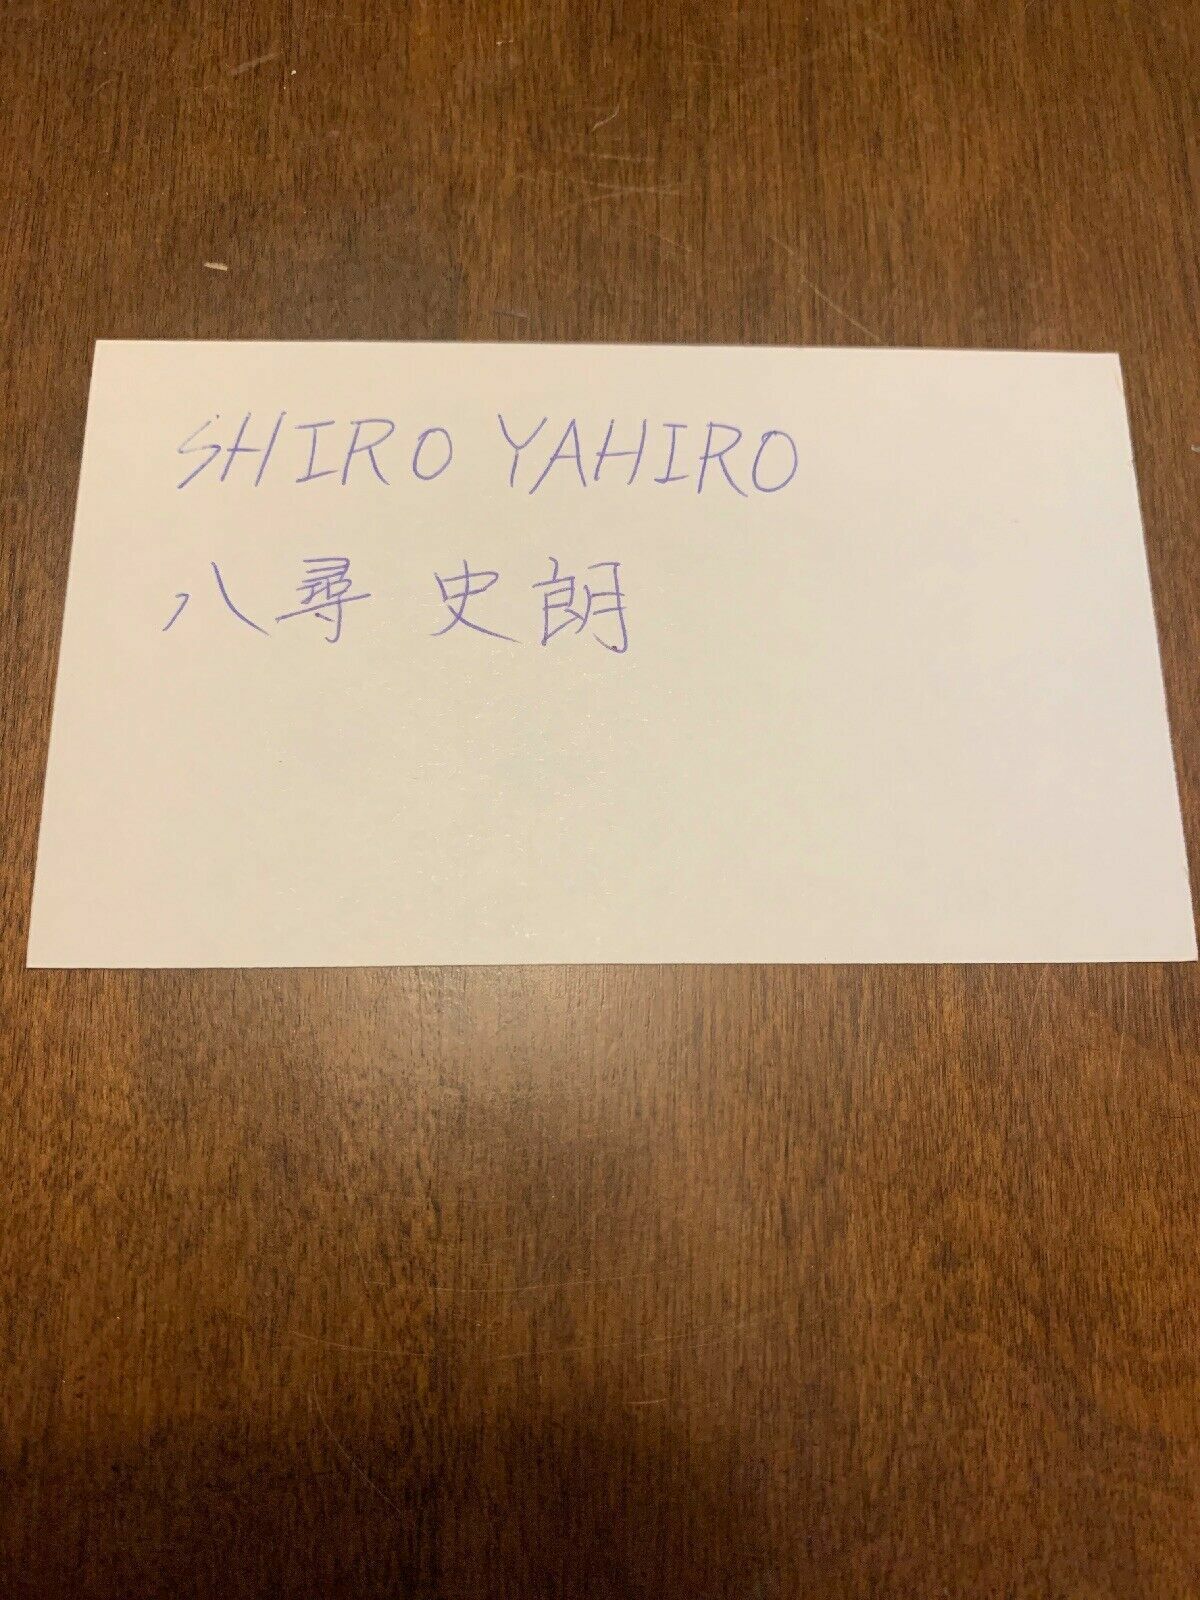 SHIRO YAHIRO - BOXER - AUTHENTIC AUTOGRAPH SIGNED- B5681